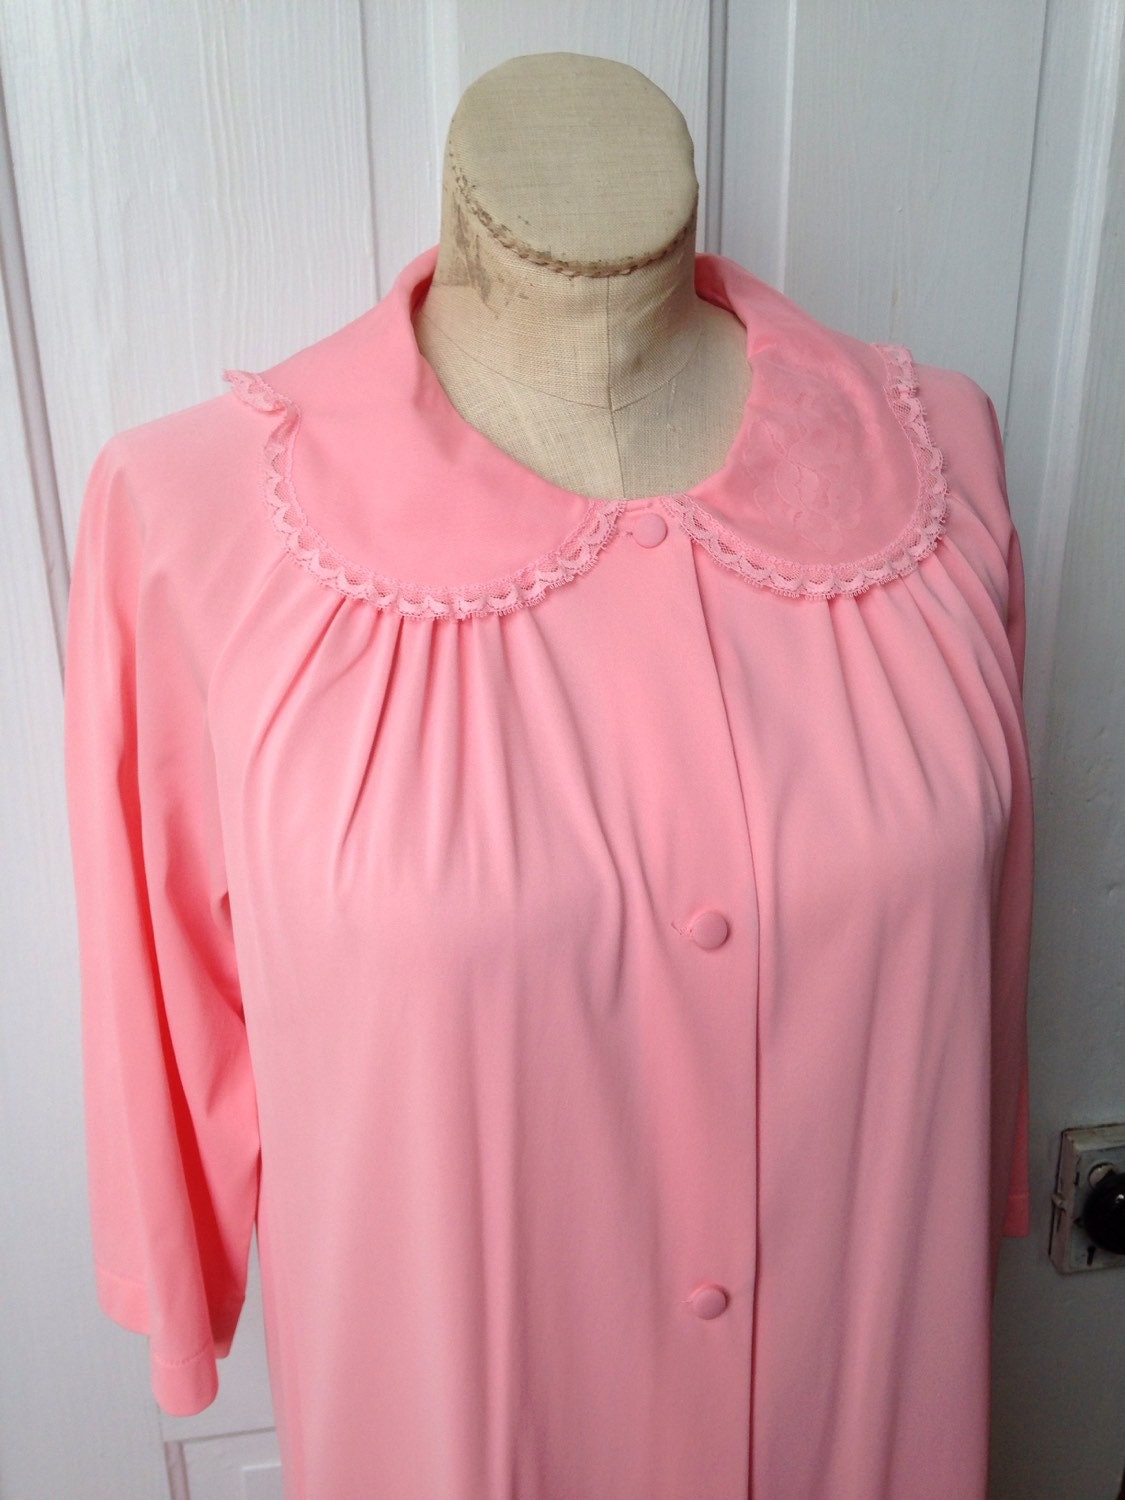 REDUCED Lingerie // Vintage Pink Nylon bed jacket by